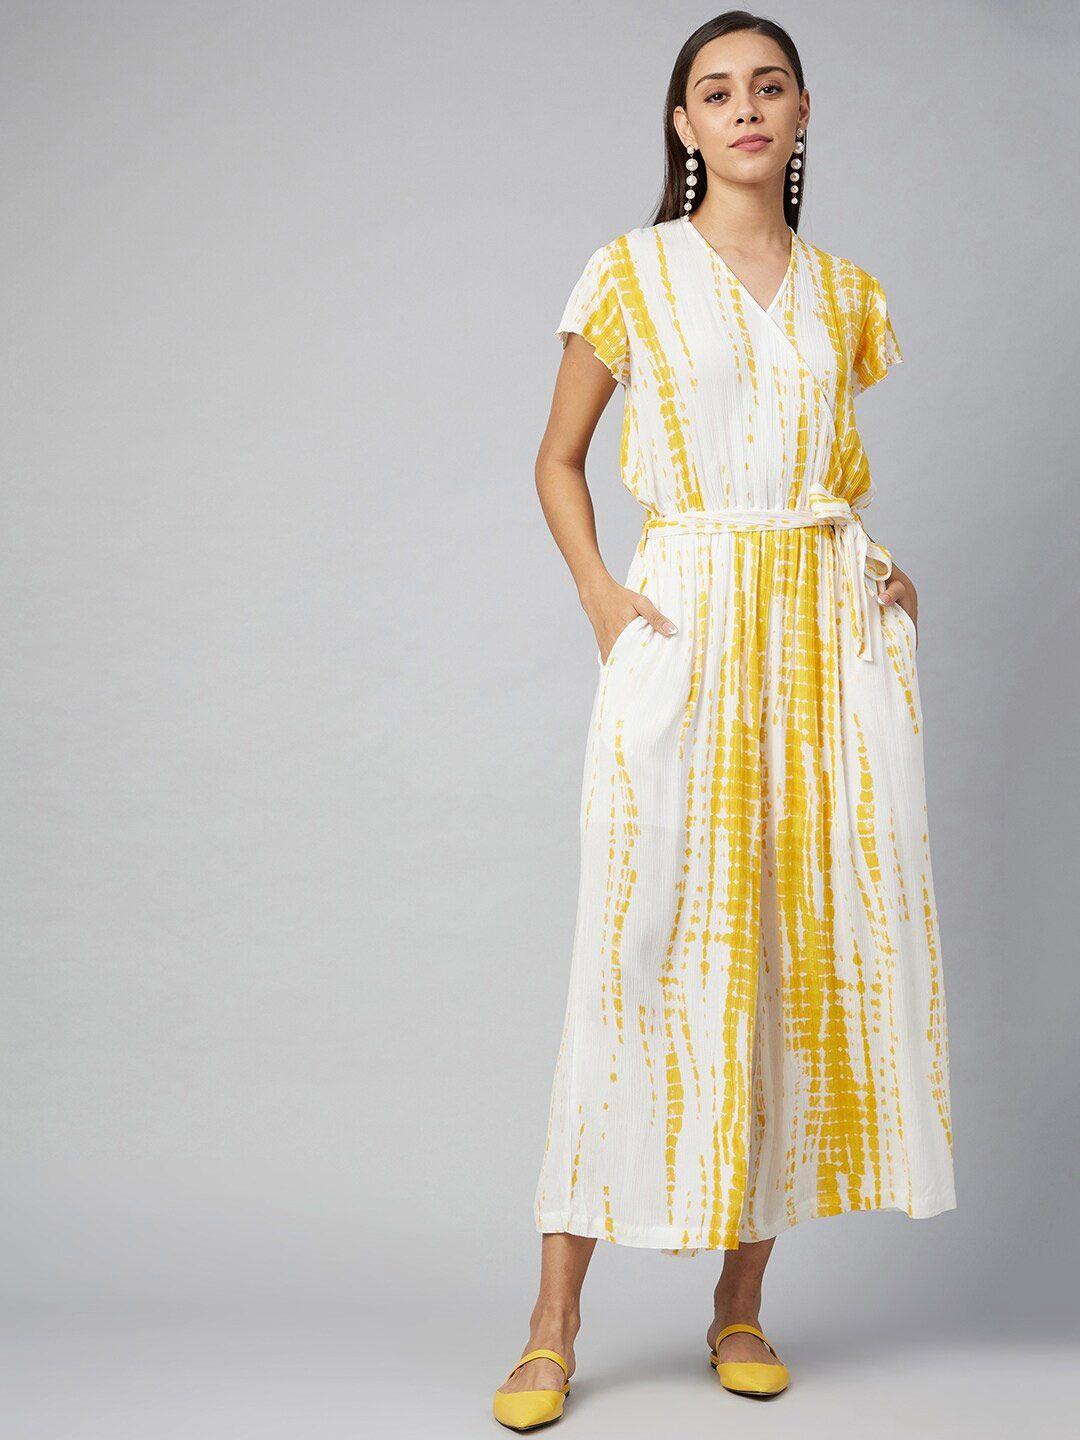 stylestone-yellow-&-white-tie-&-dye-printed-basic-jumpsuit